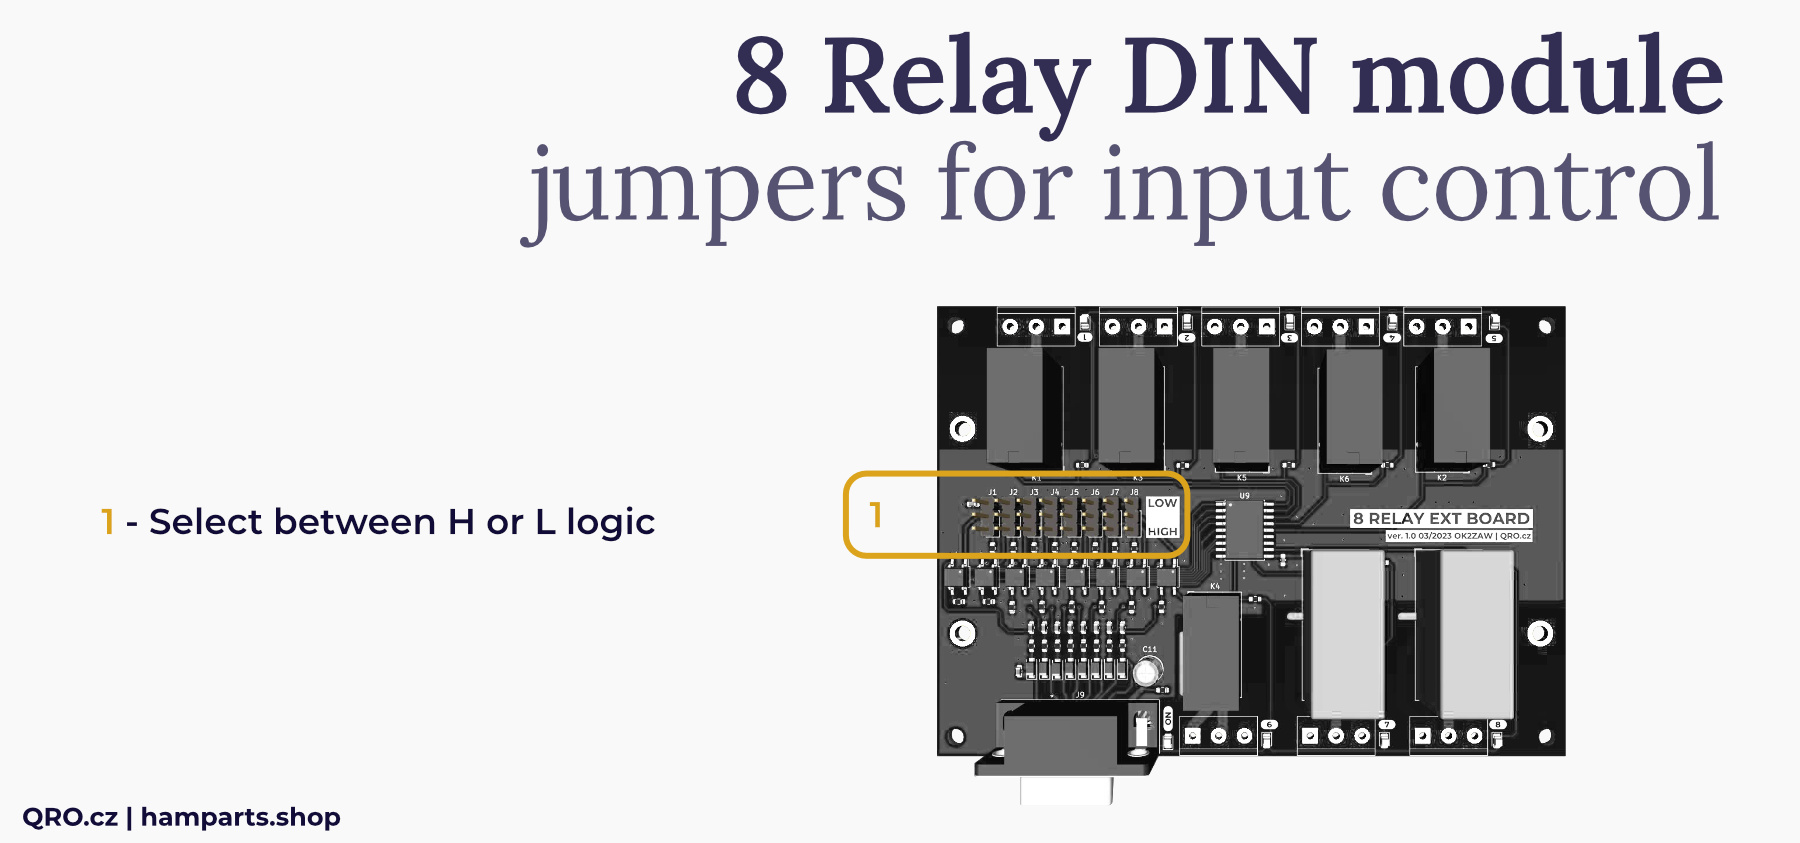 8 relay din module jumper settings qro.cz hamparts.shop